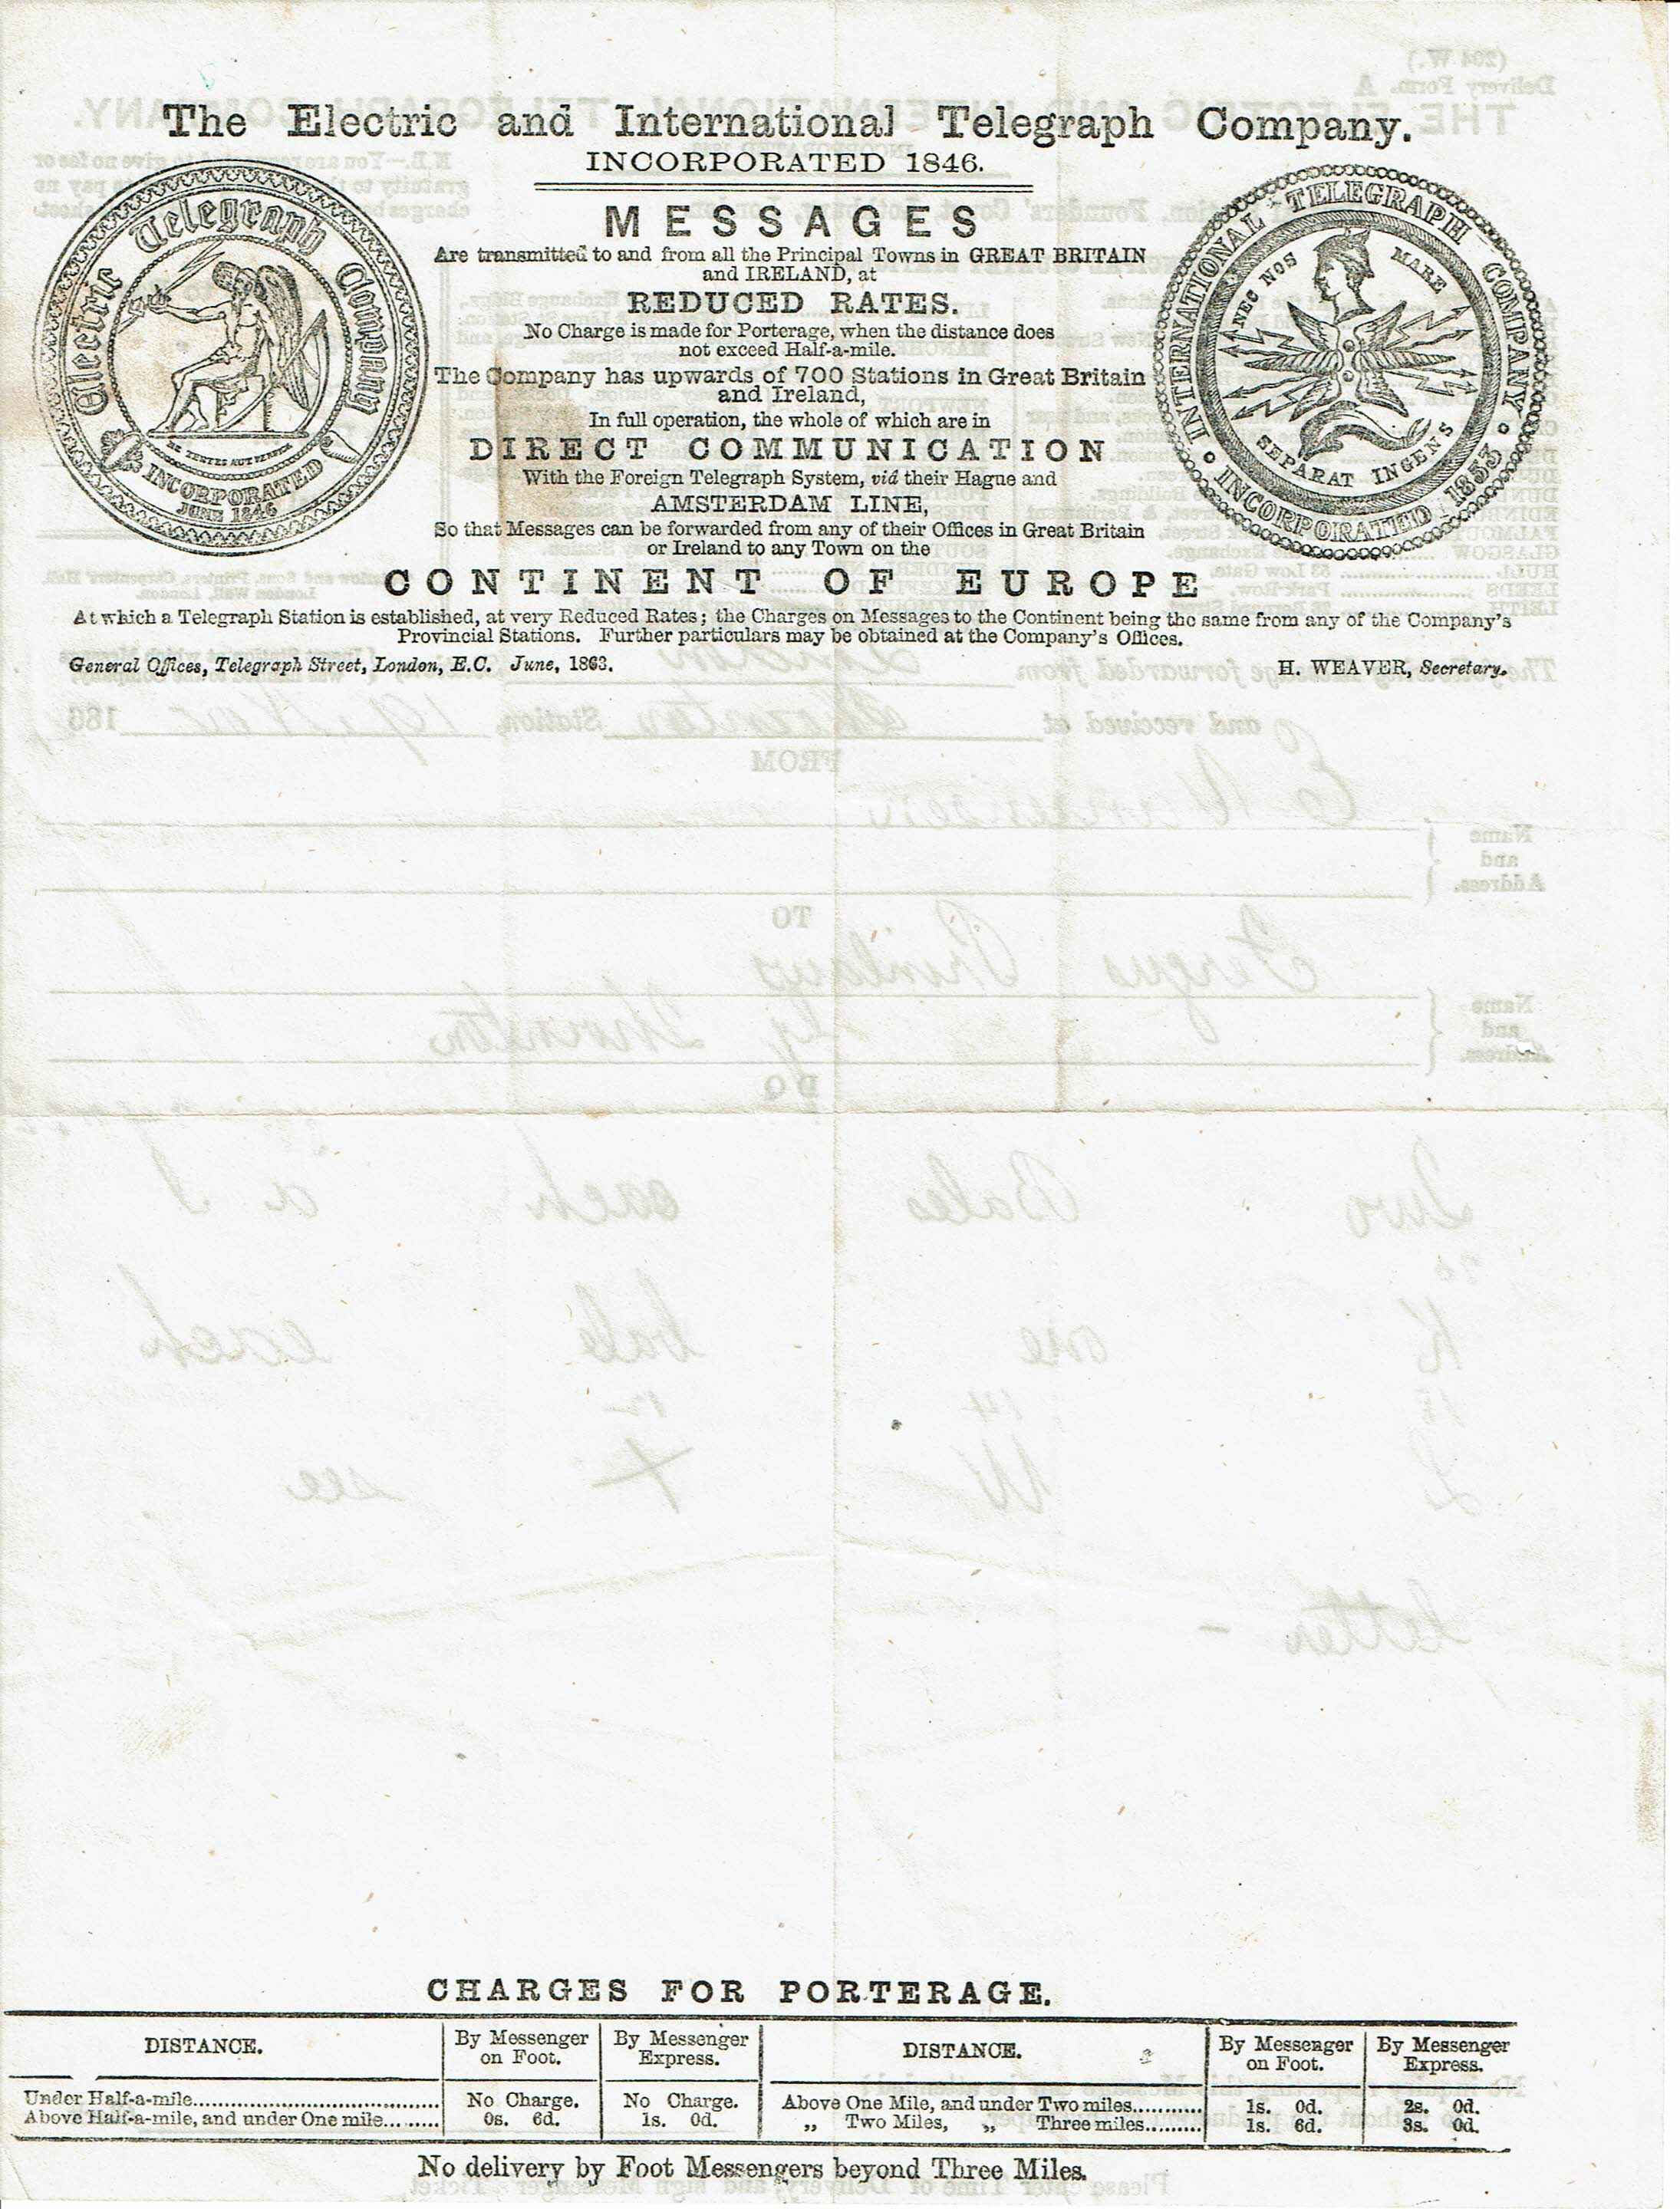 Electric Telegraph Company Form A - 1863 back.